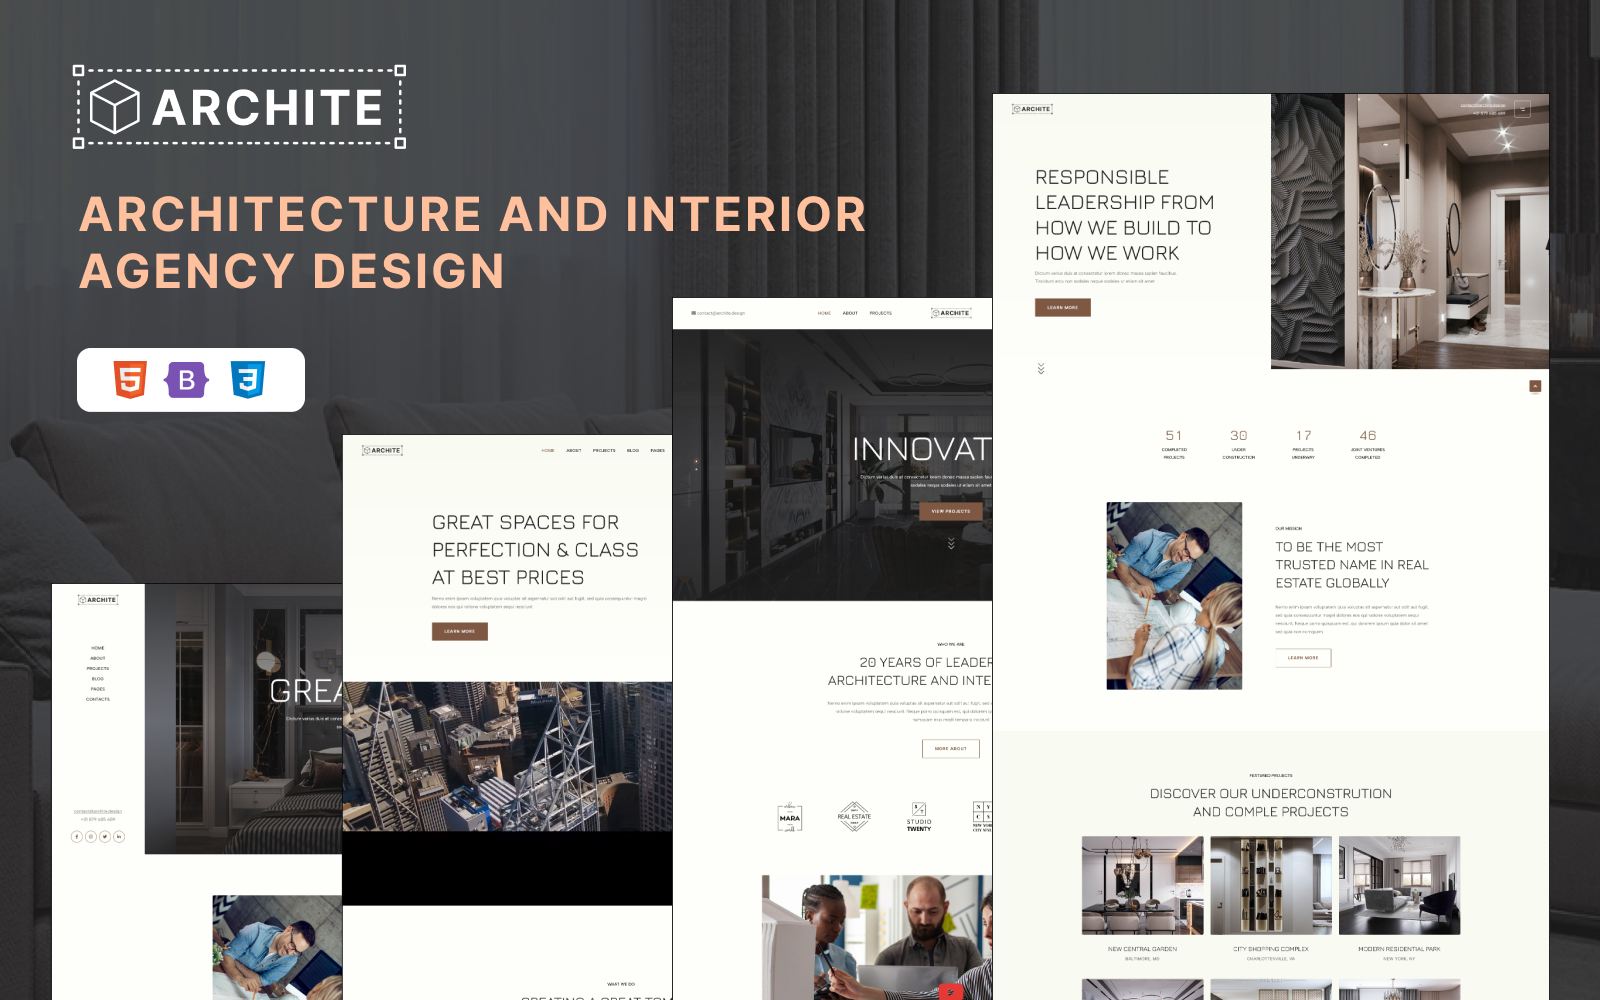 Archite - Architecture and Interior Agency Design